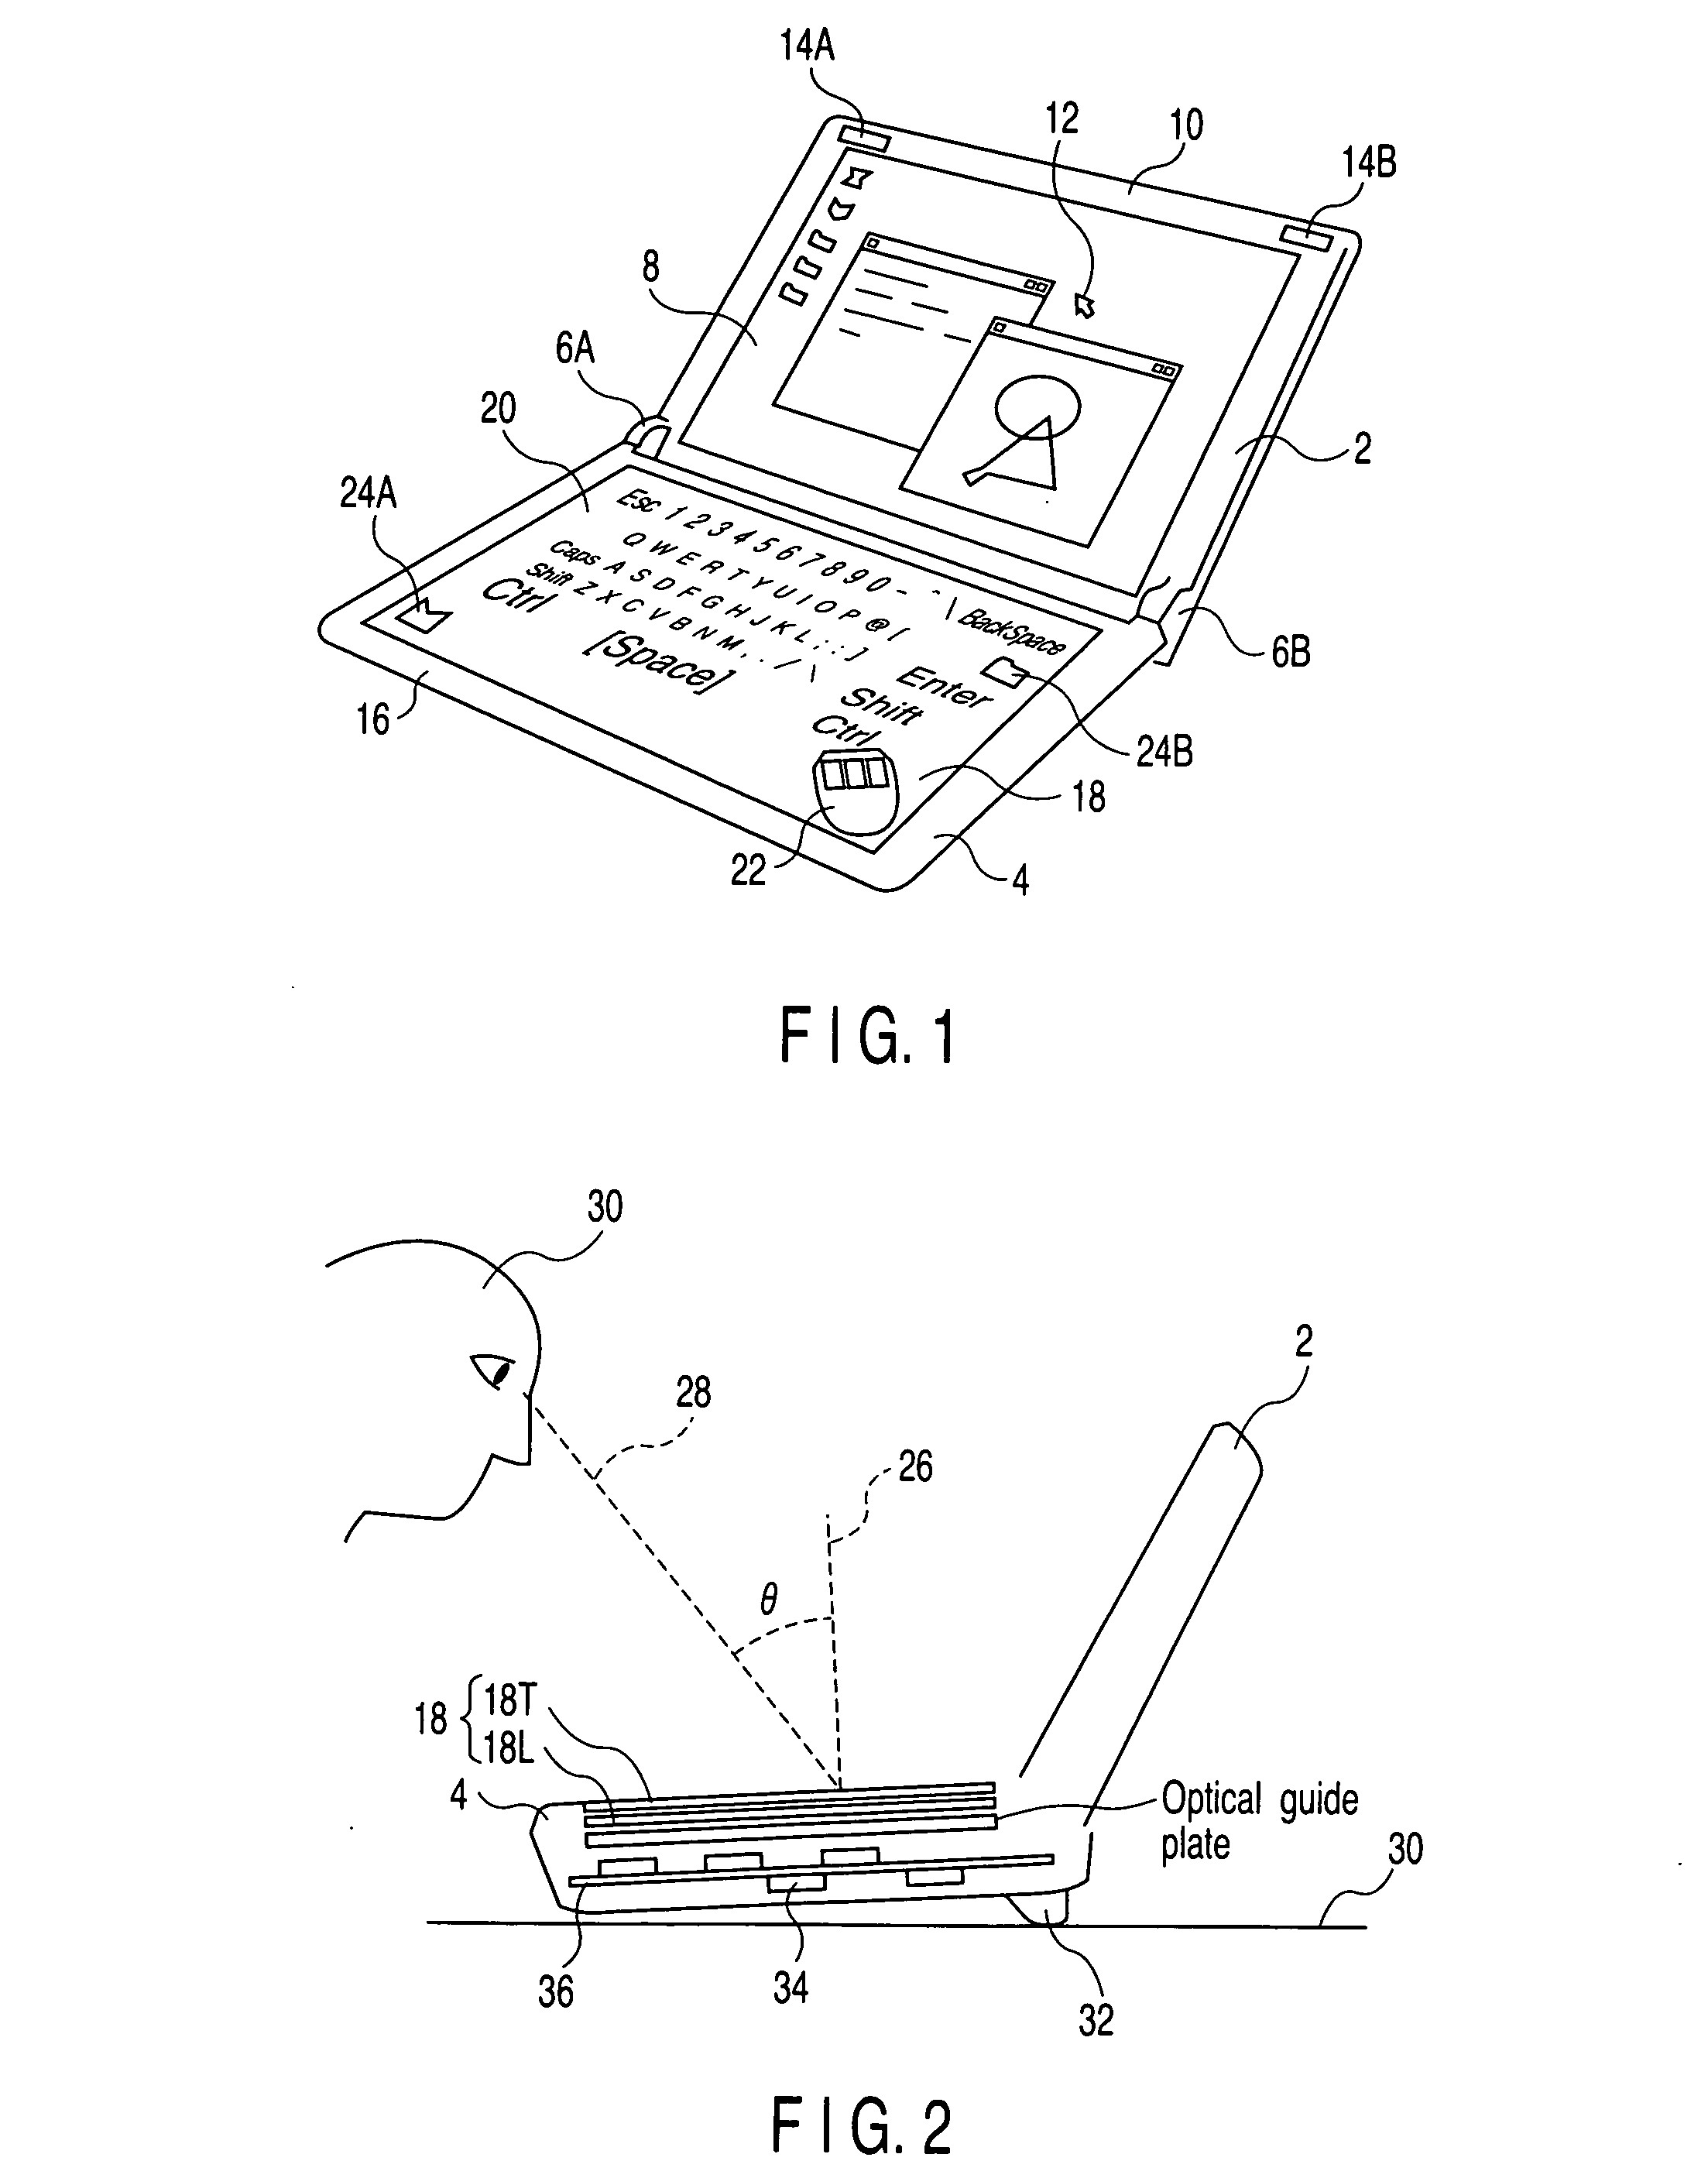 Electronic apparatus having universal human interface